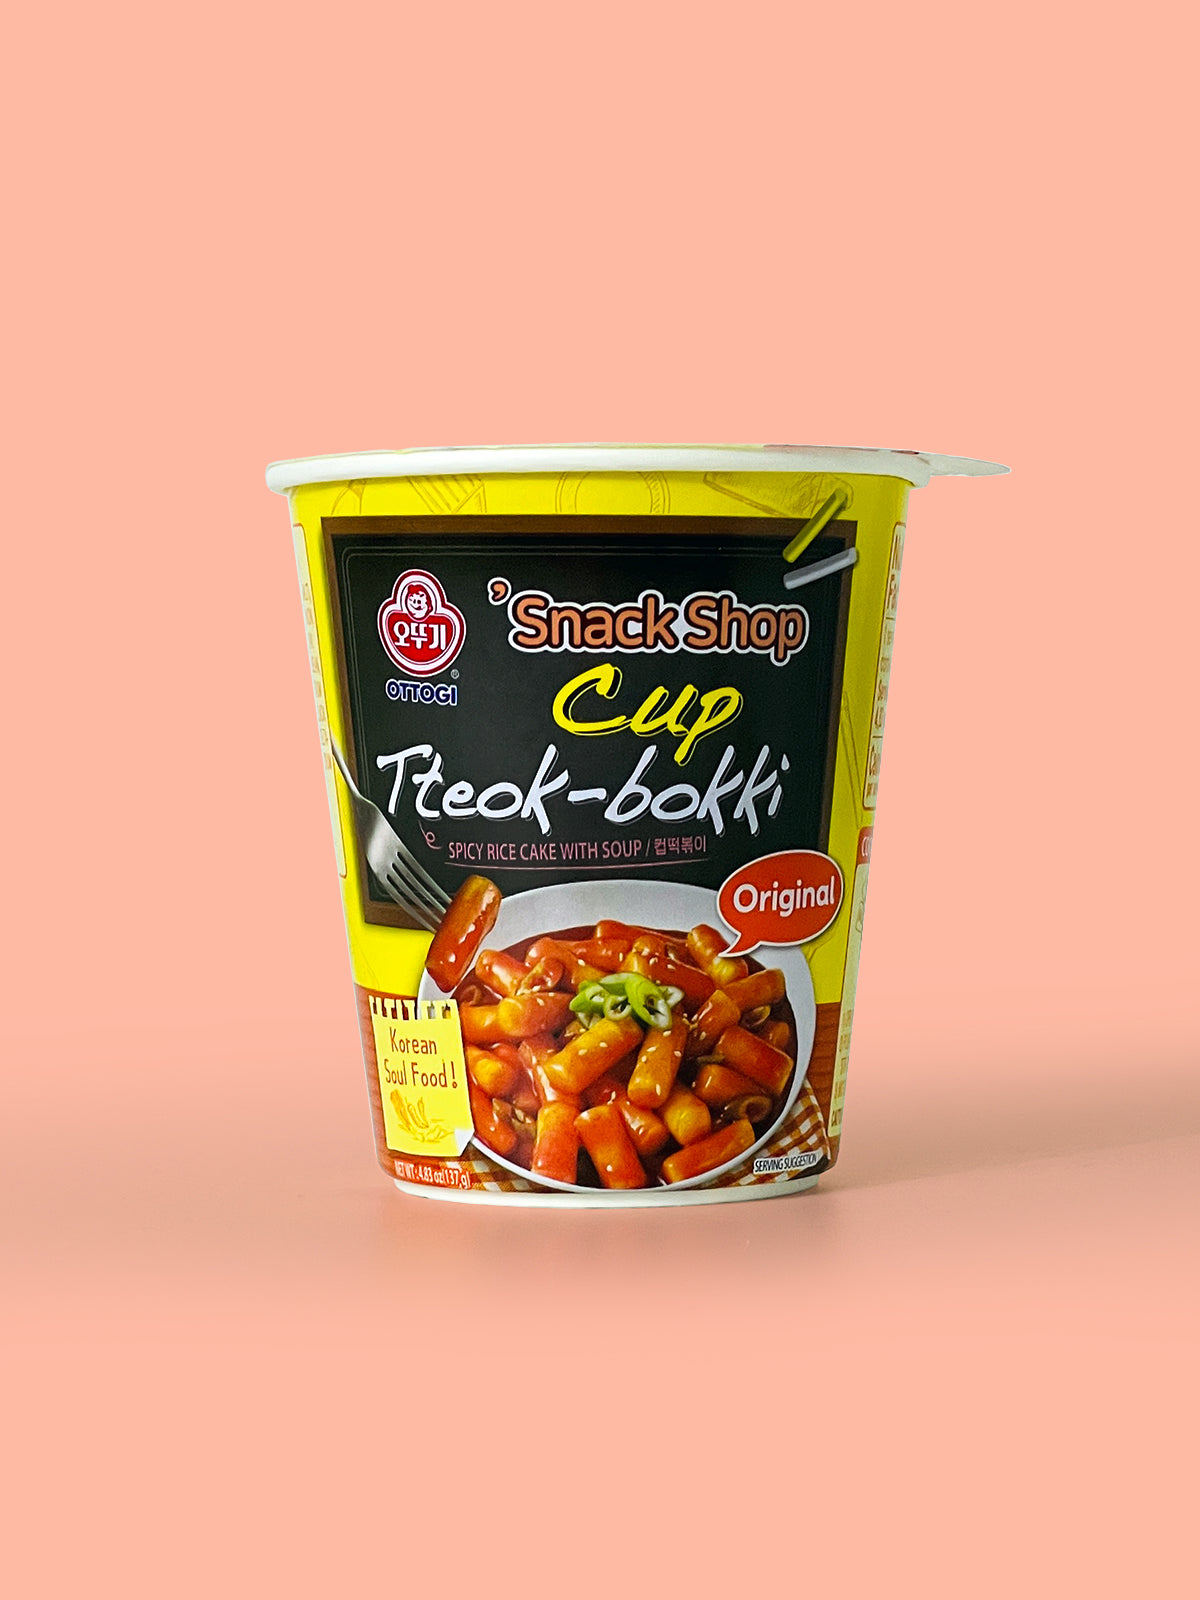 Cup Tteok-bokki (Spicy Rice Cake)